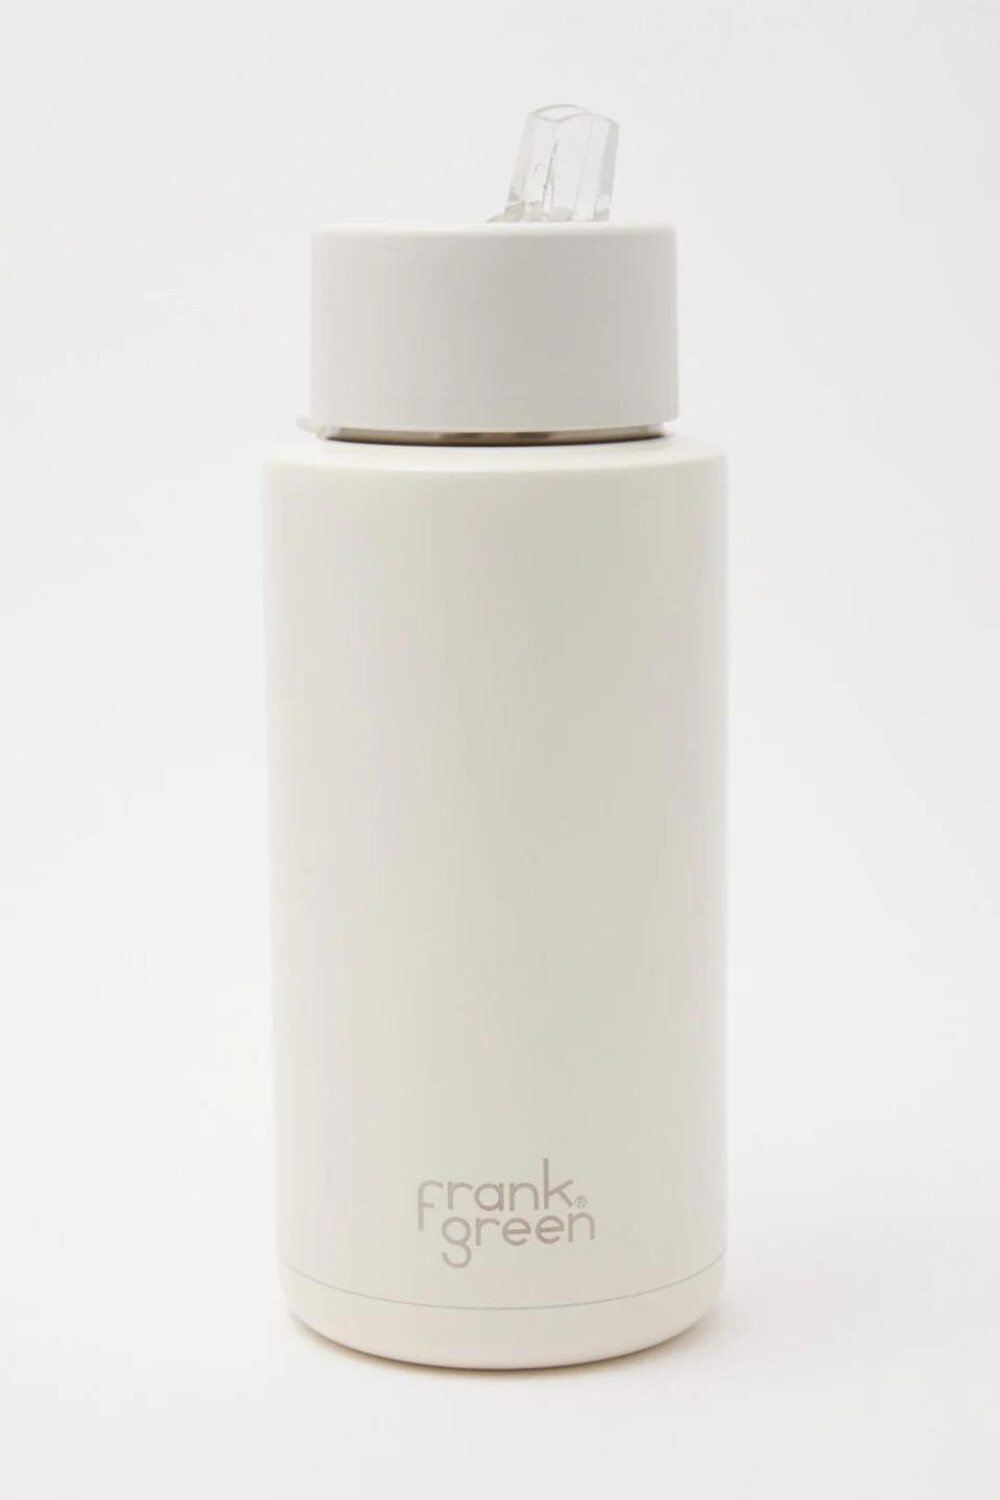 Frank Green Limited Edition Ceramic Reusable Bottle - 34oz / 1000mL - White